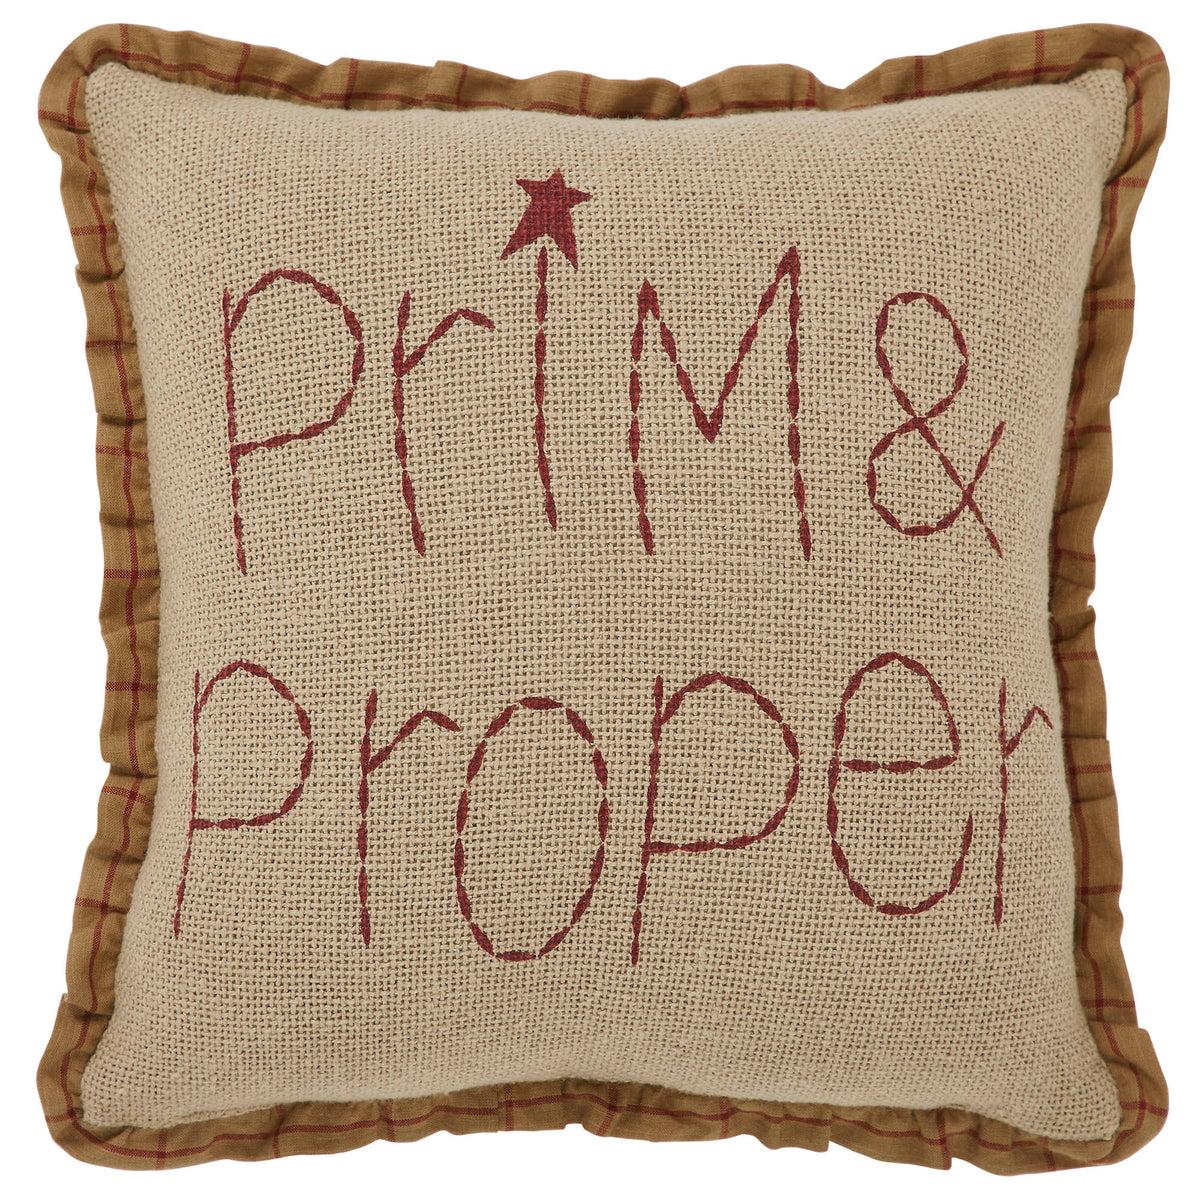 Connell Prim & Proper Pillow 12x12